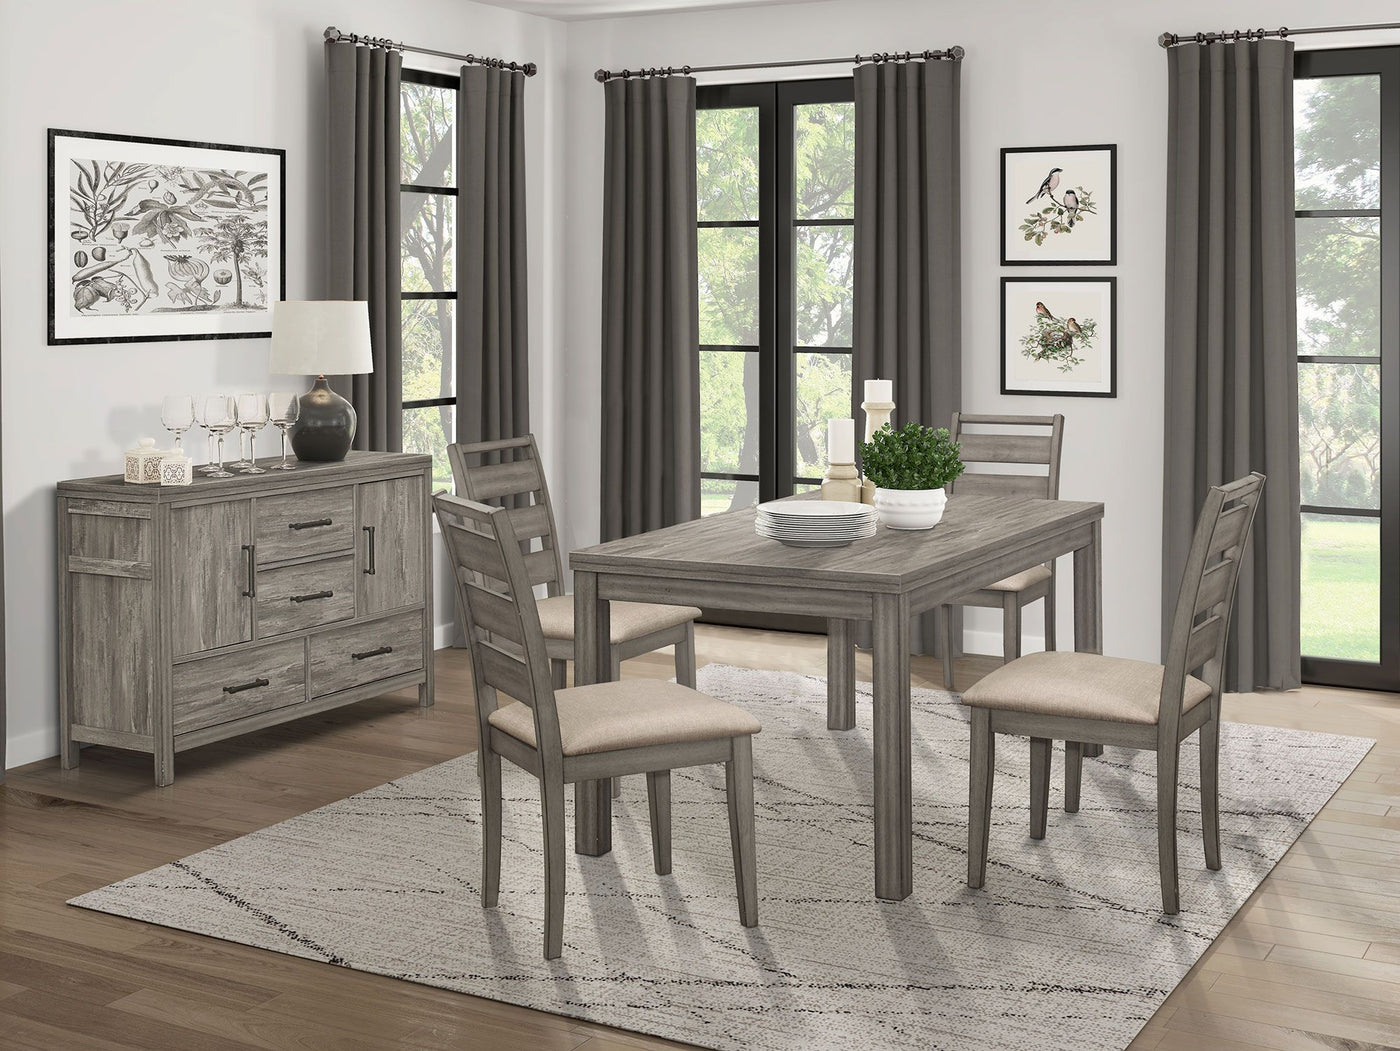 Bainbridge Dining Chair - Weathered Grey